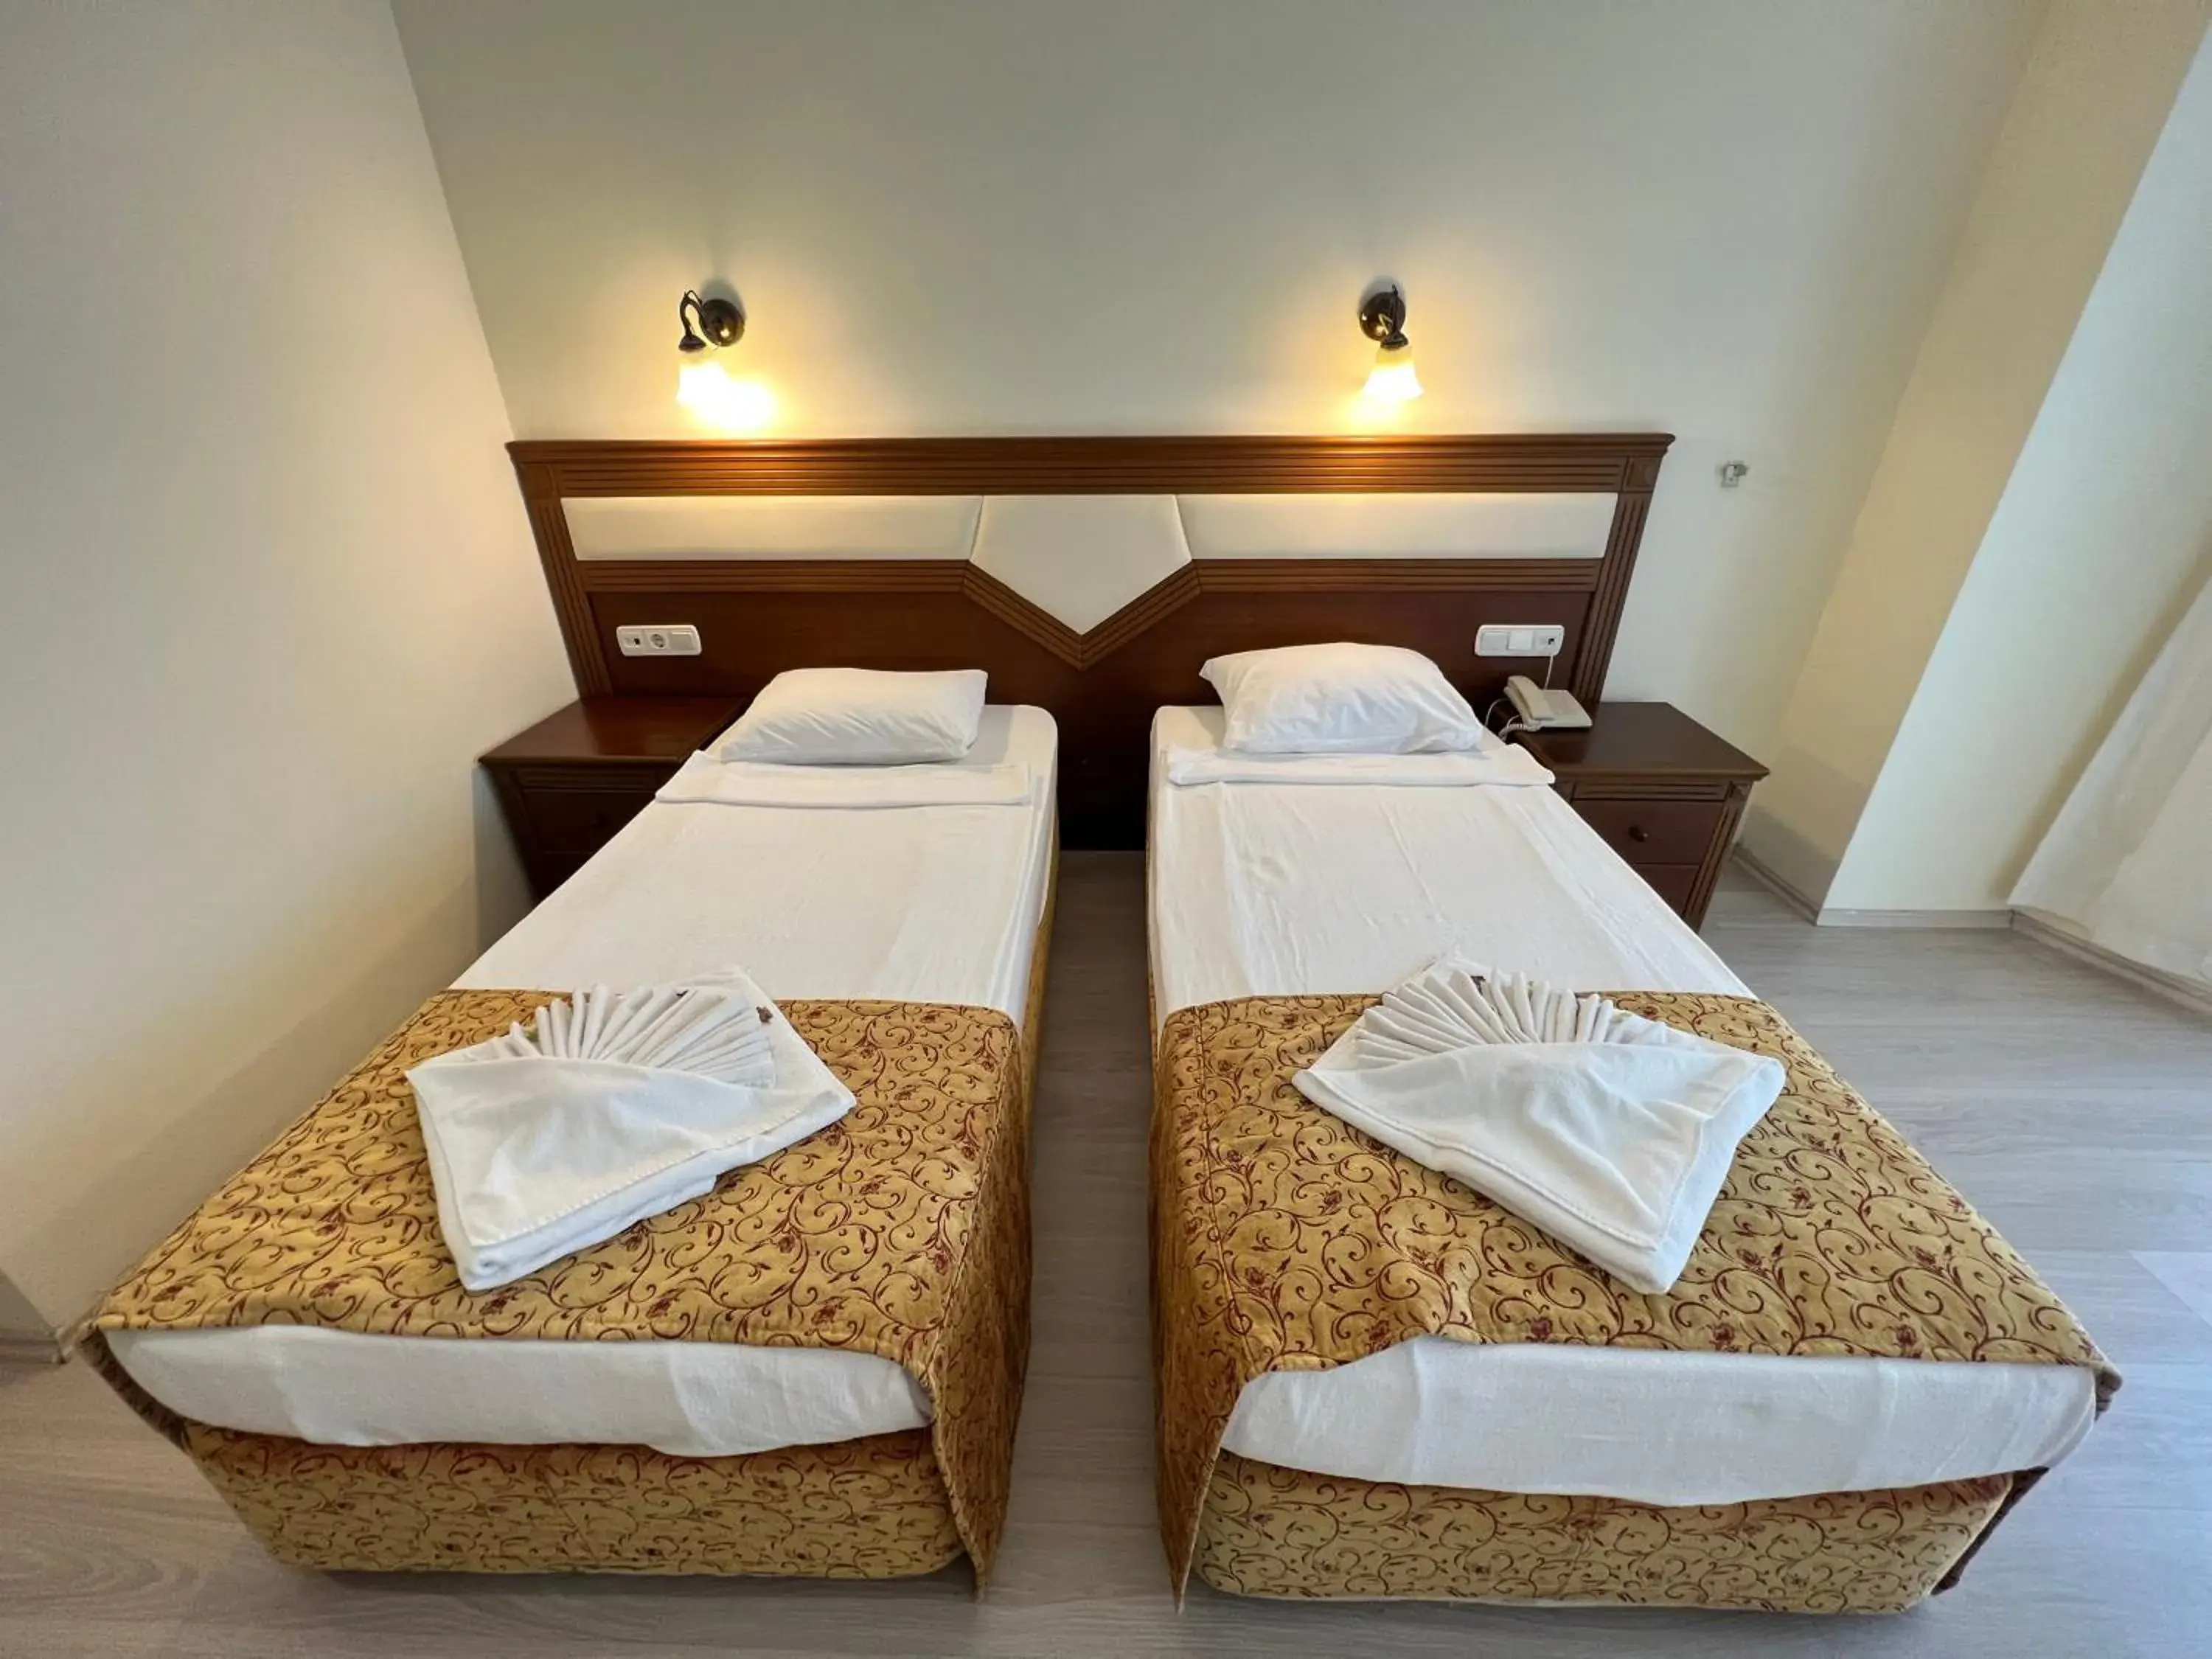 Bed in Valeri Beach Hotel